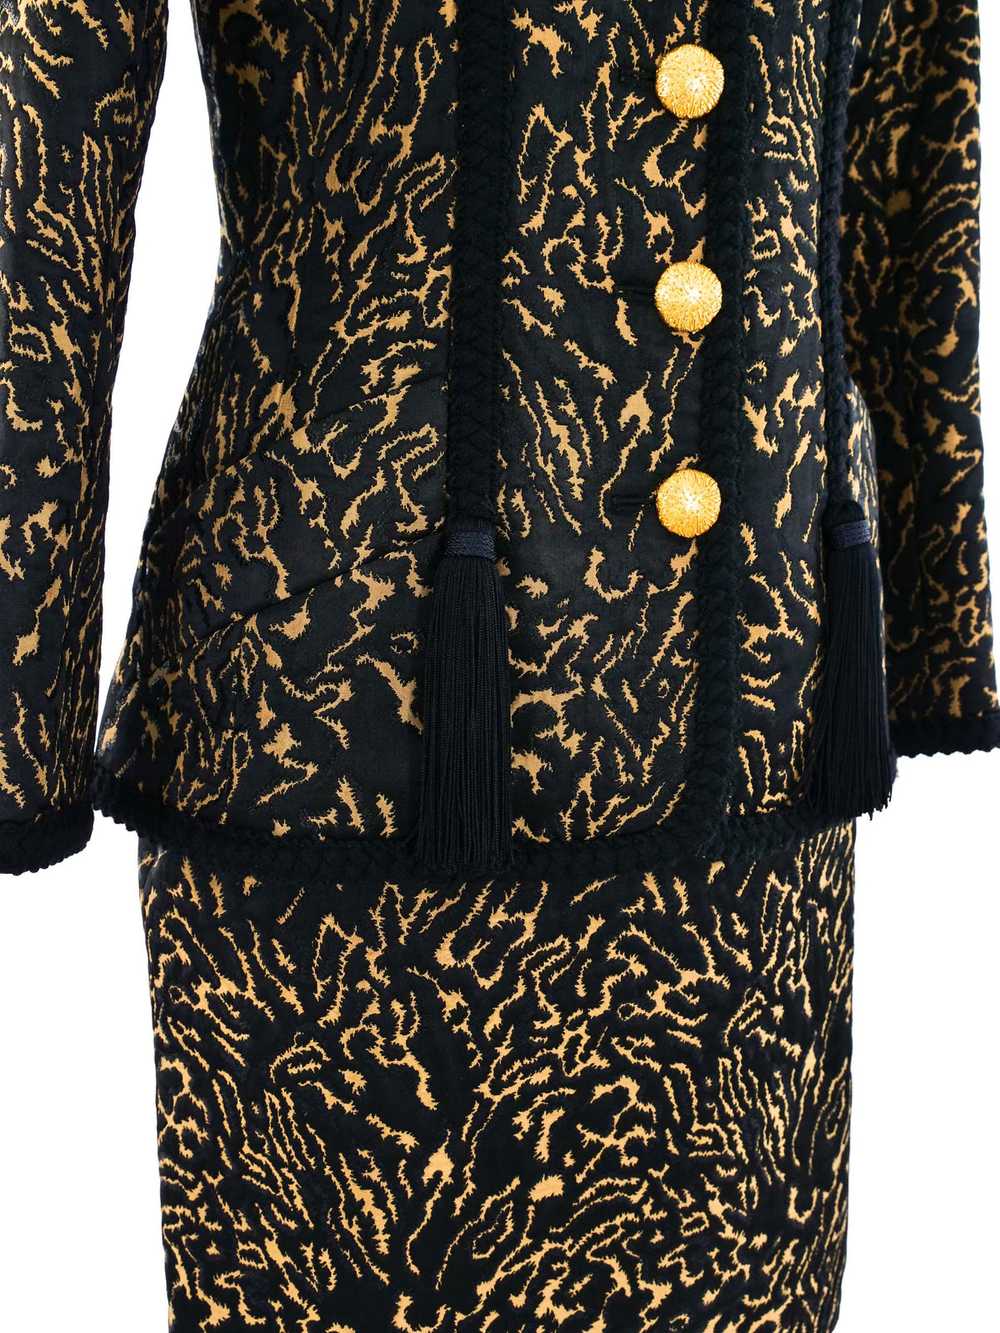 Yves Saint Laurent Brocade Skirt Suit - image 6